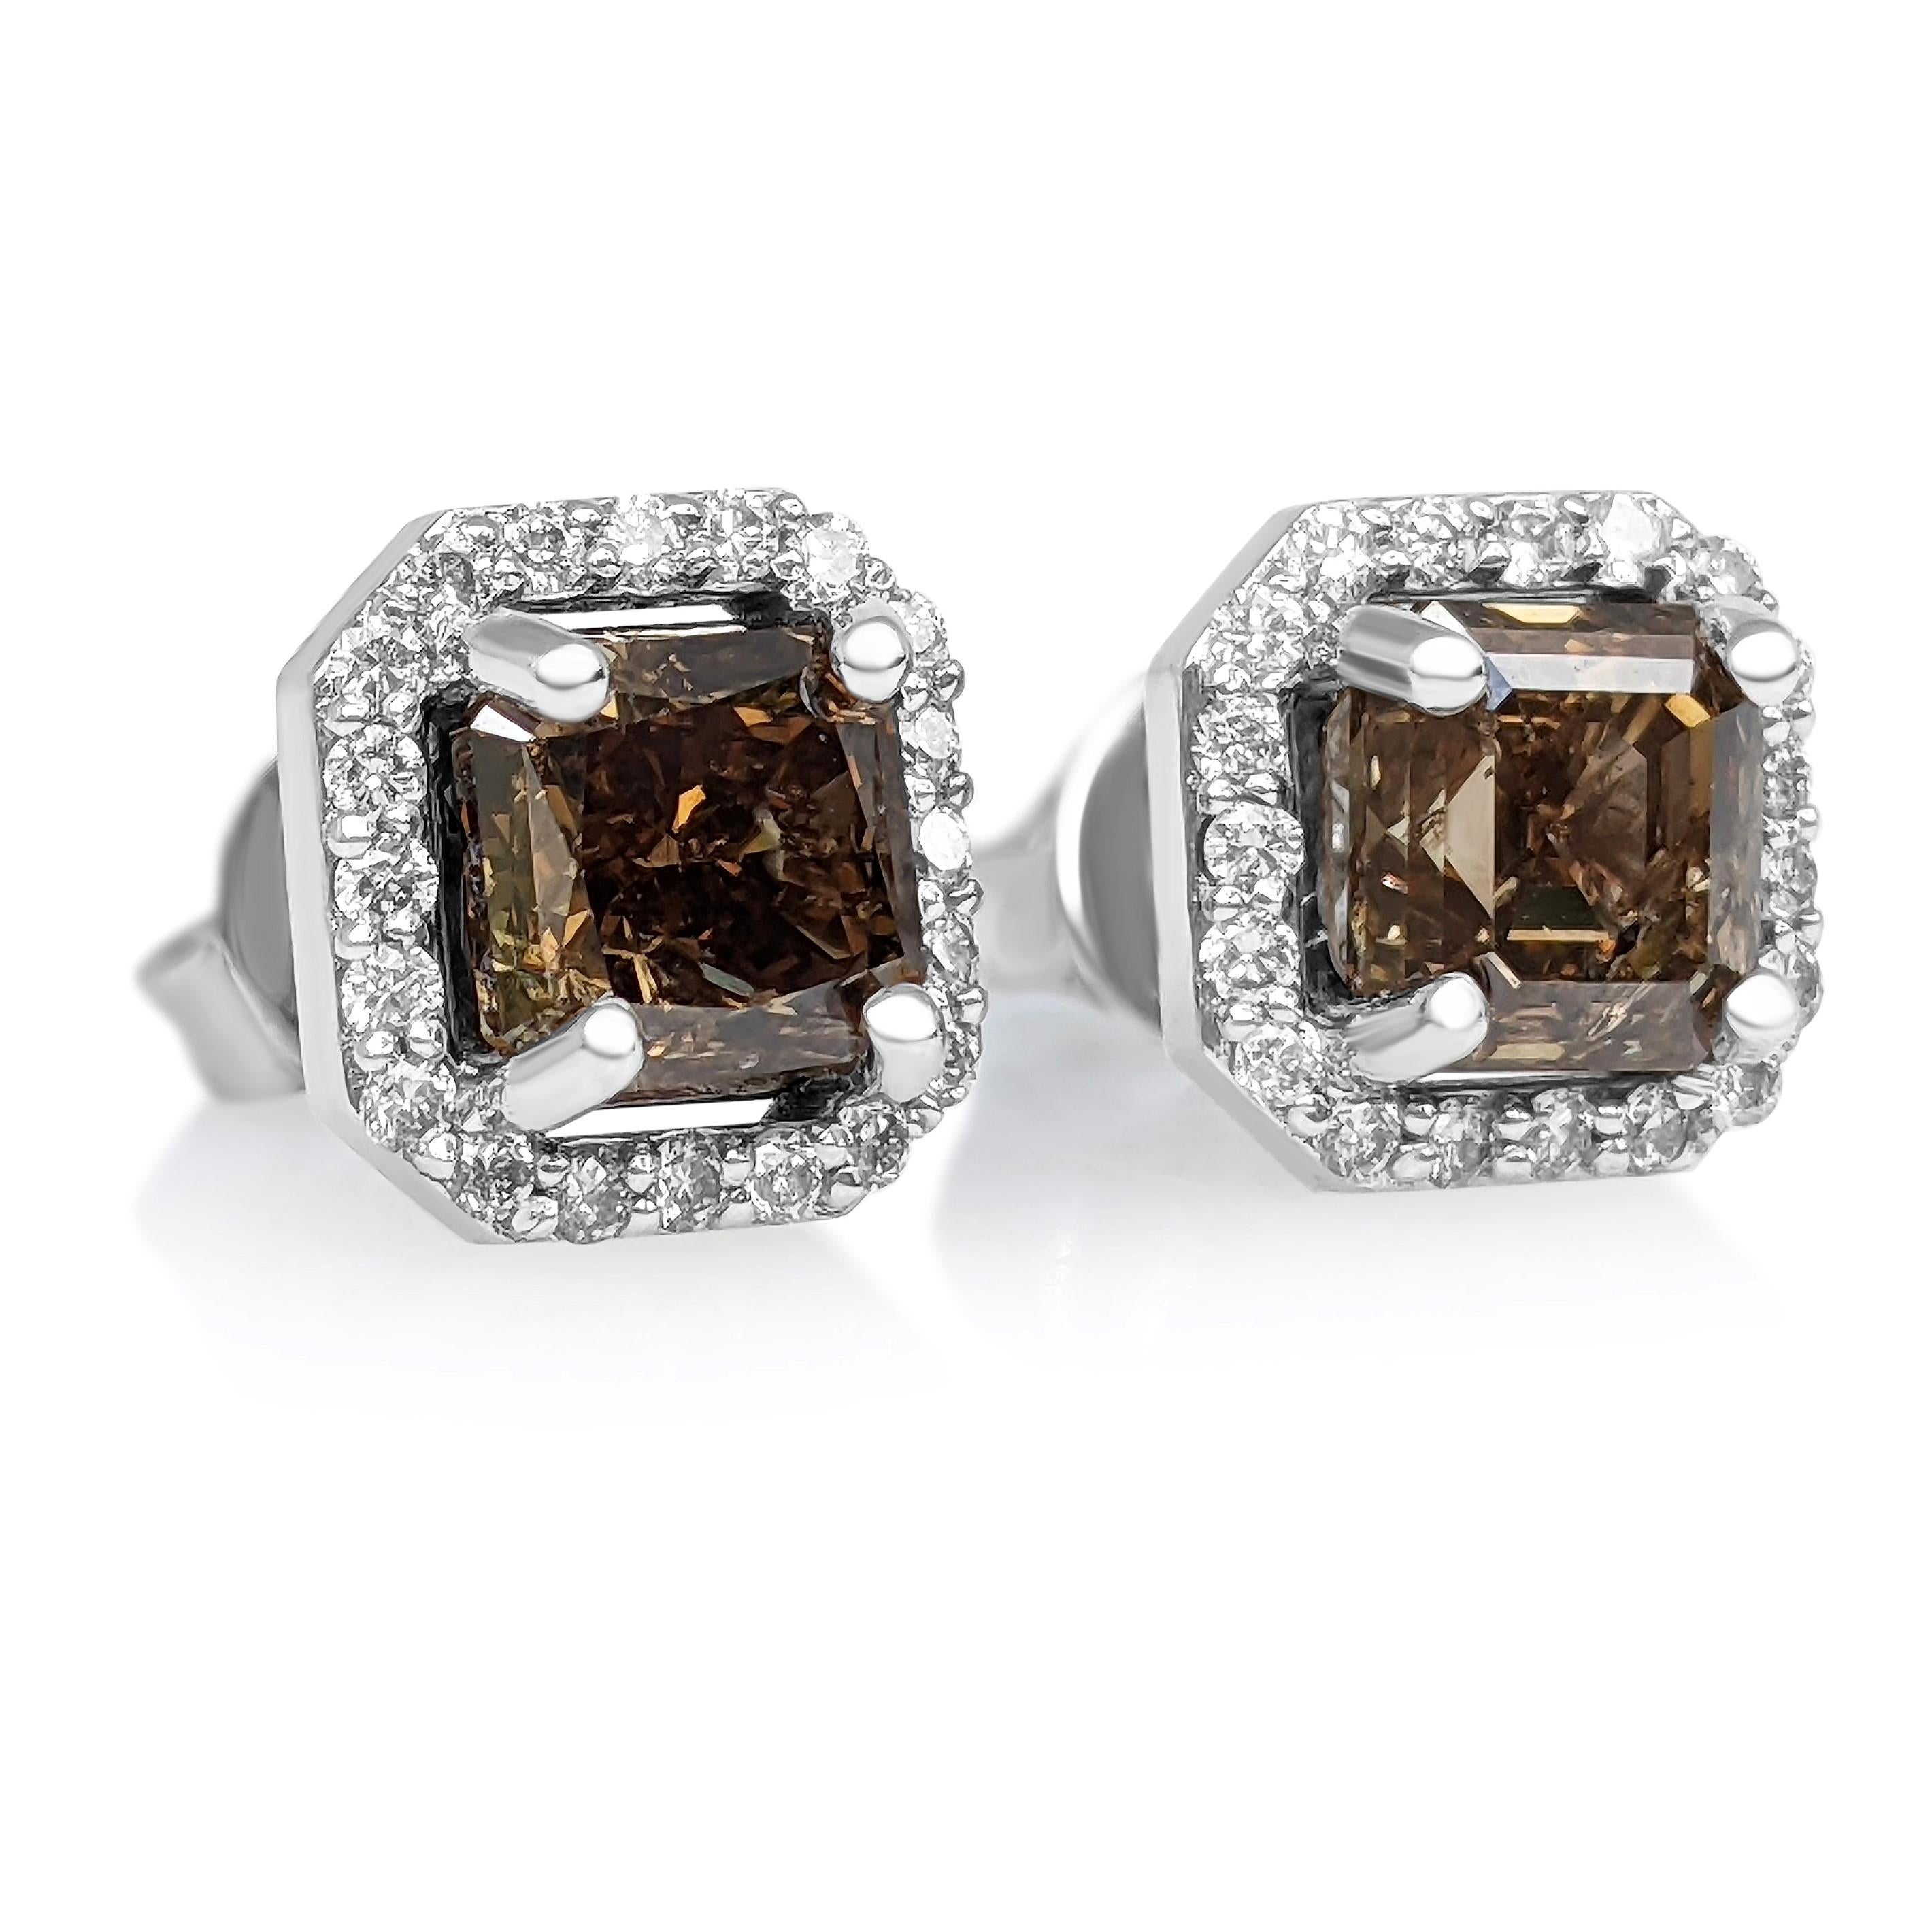 Square Cut $1 NO RESERVE! - 2.34cttw Fancy Diamonds, 14 Karat White Gold Halo Earrings